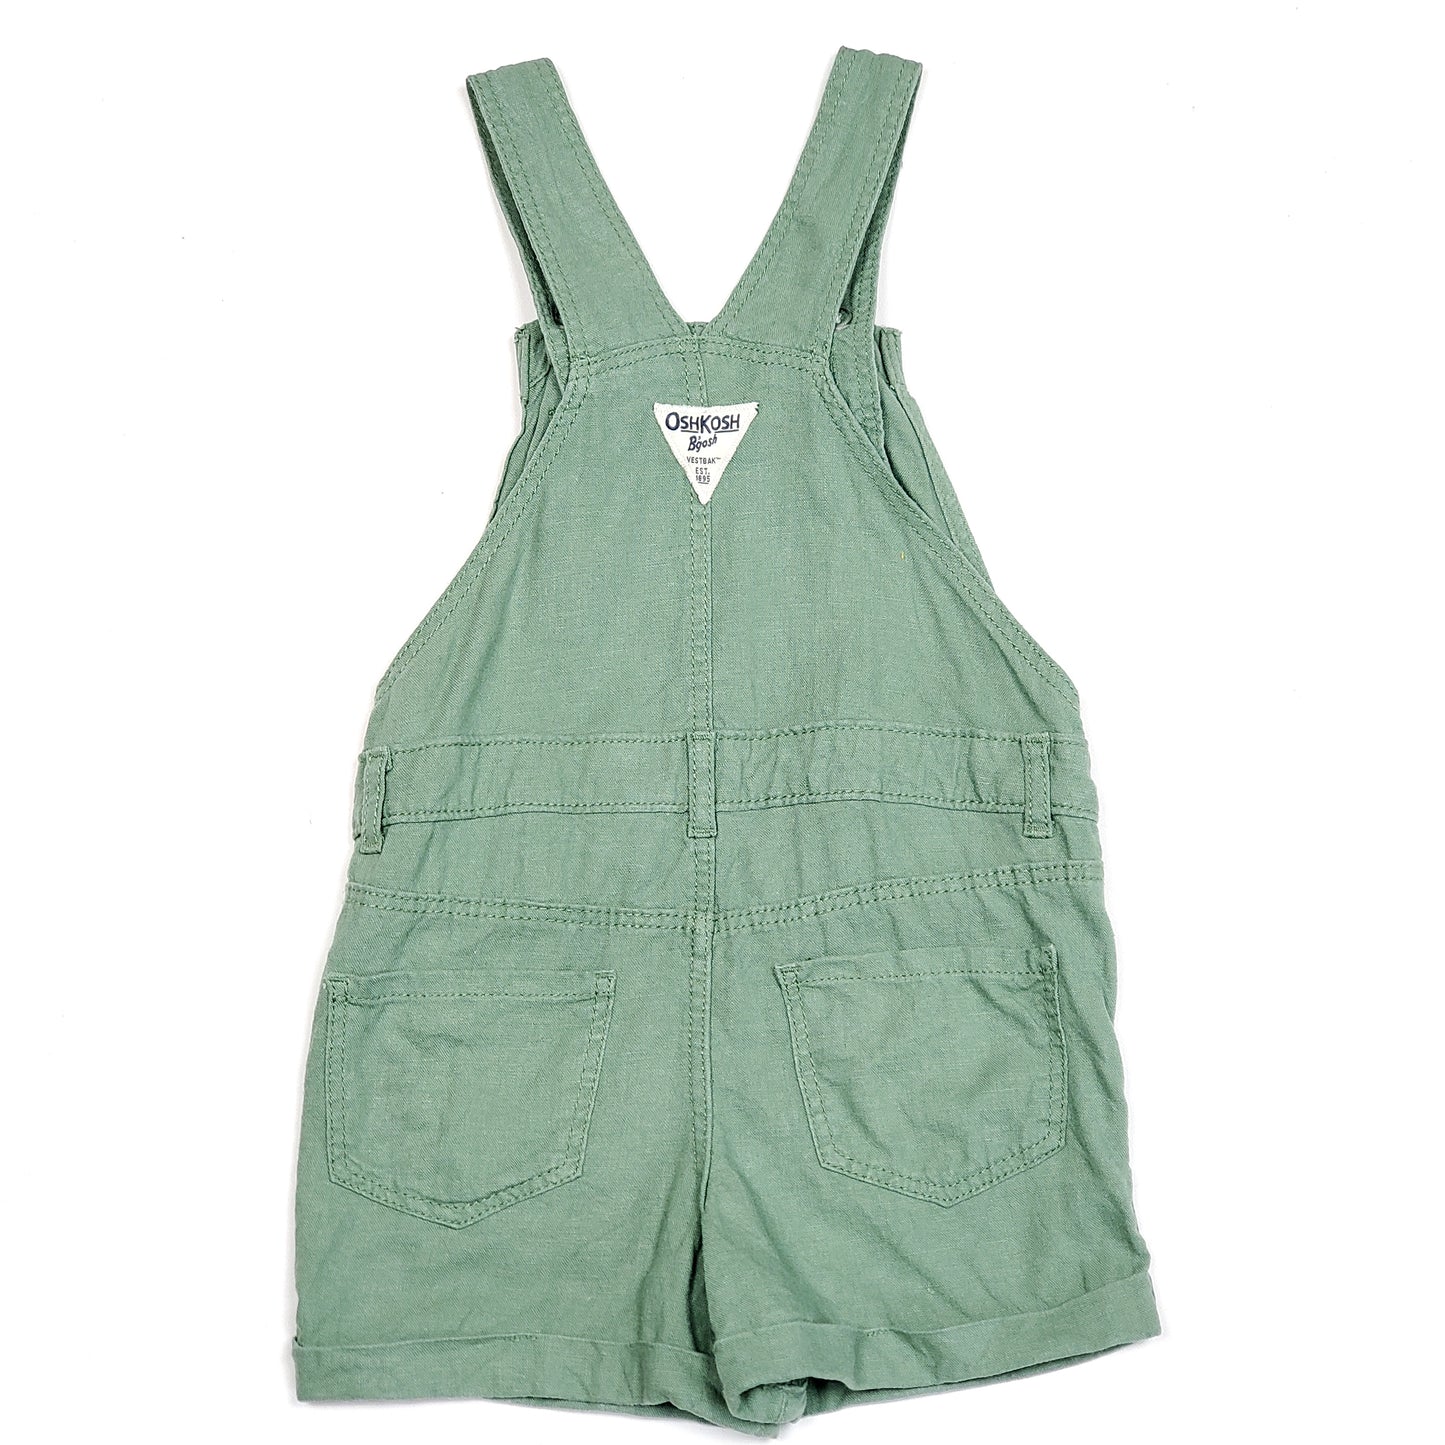 Oshkosh Girls Green Overall Shorts 5T Used View 2